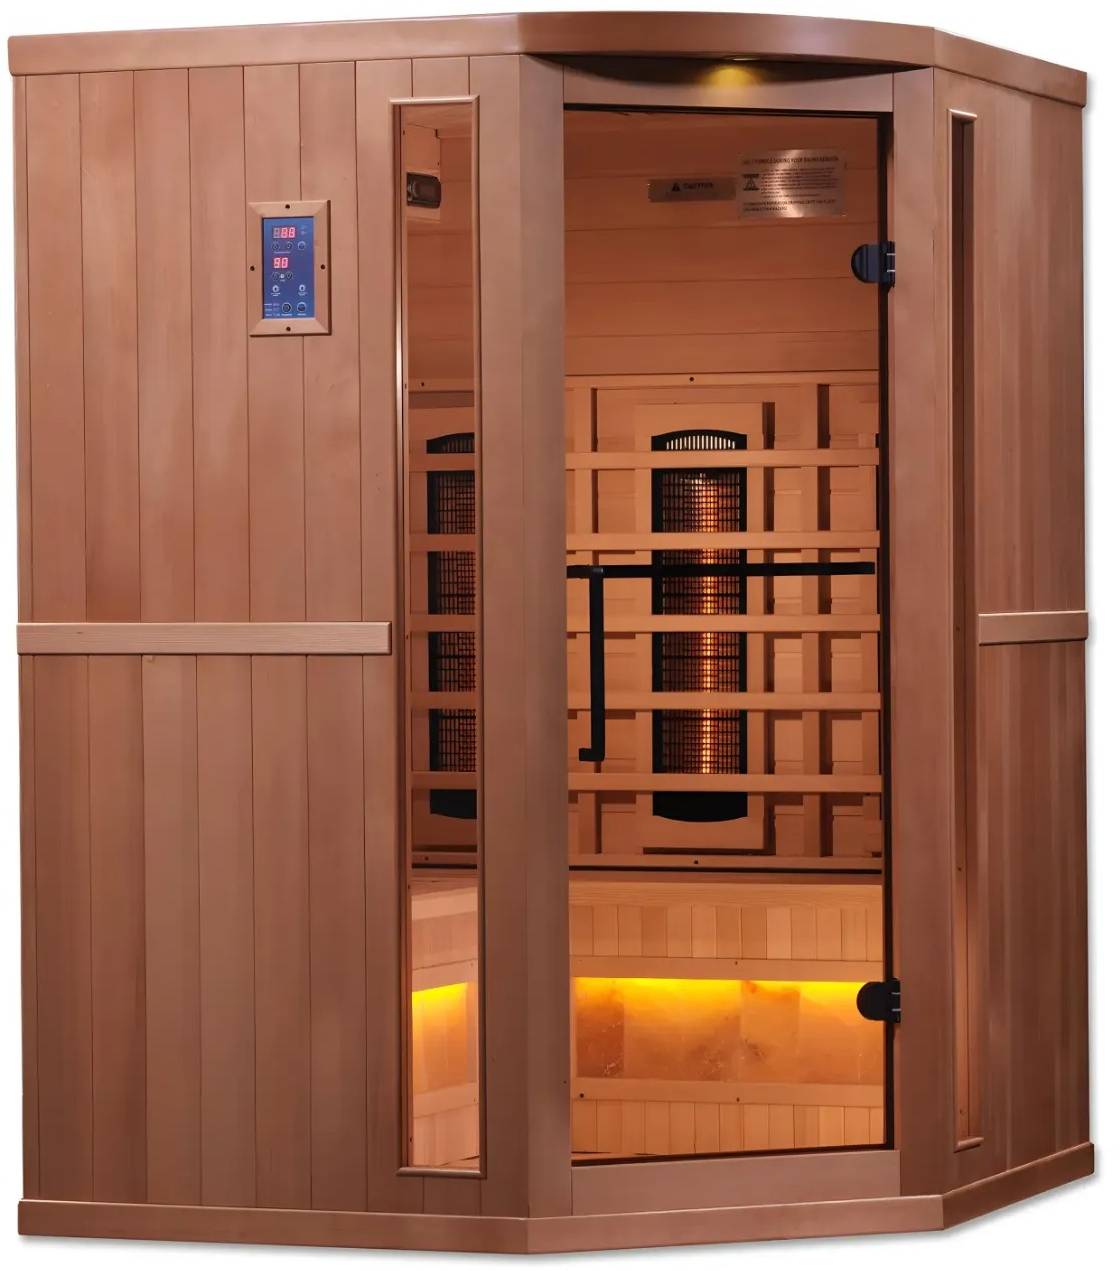 ZiahCare's Golden Designs 3 Person Full Spectrum Infrared Corner Sauna Reserve Edition Mockup Image 3